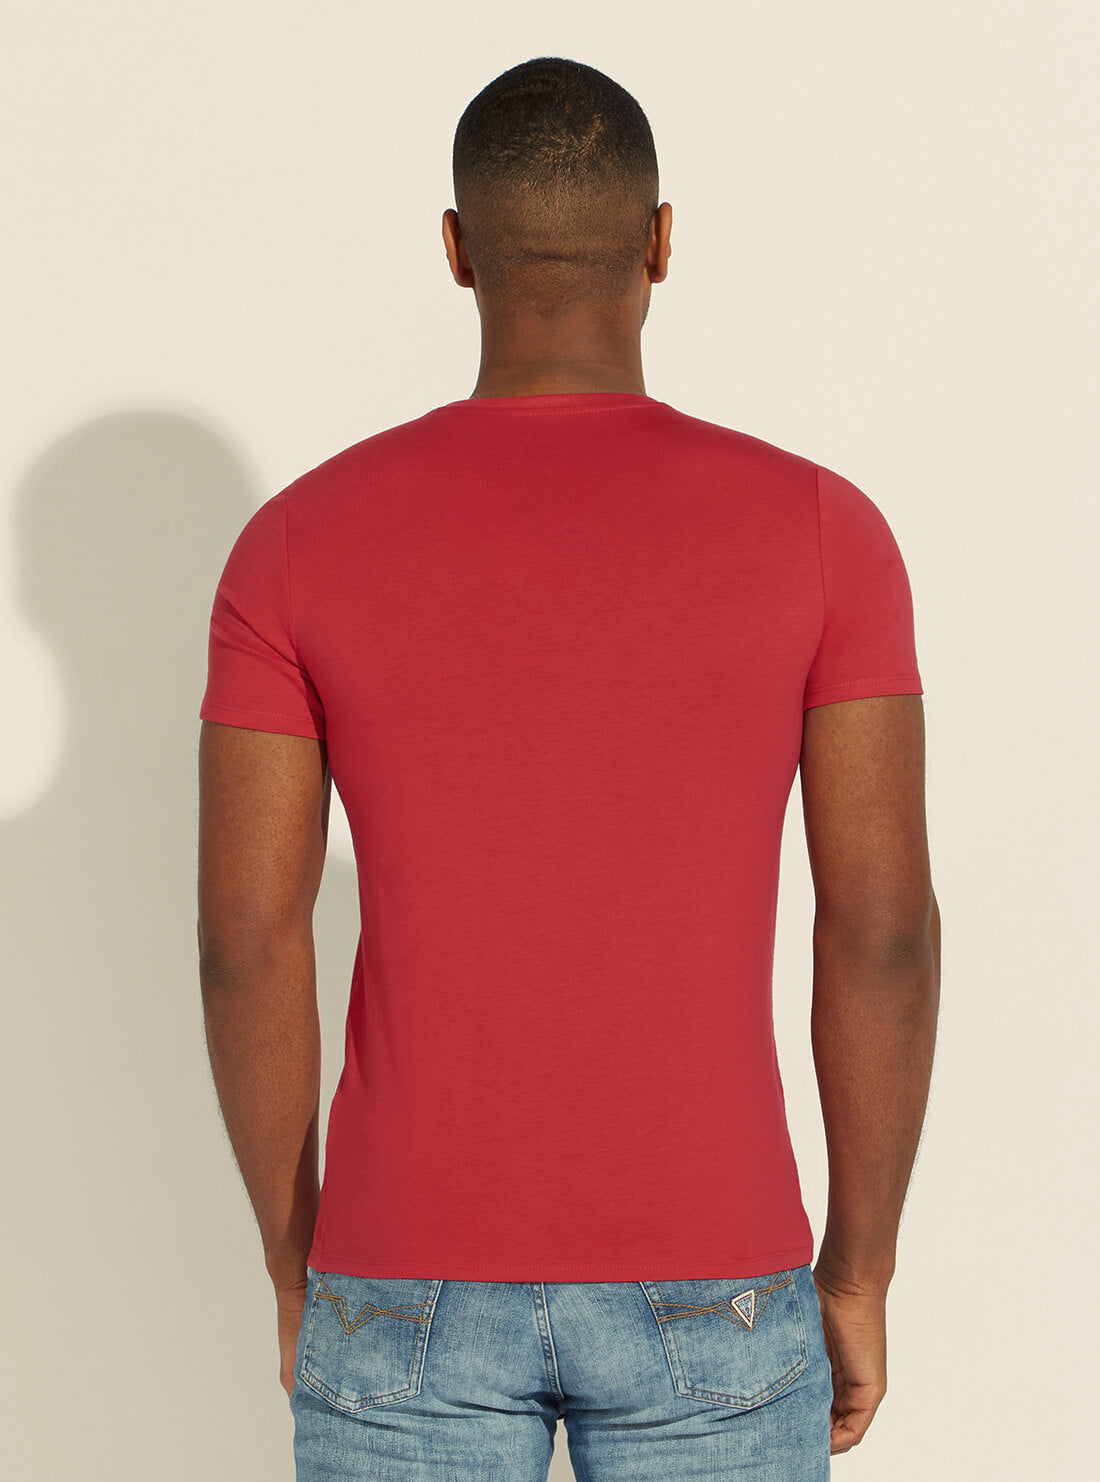 GUESS Mens Eco Red V-Neck Basic T-Shirt M1RI37I3Z11 Back View